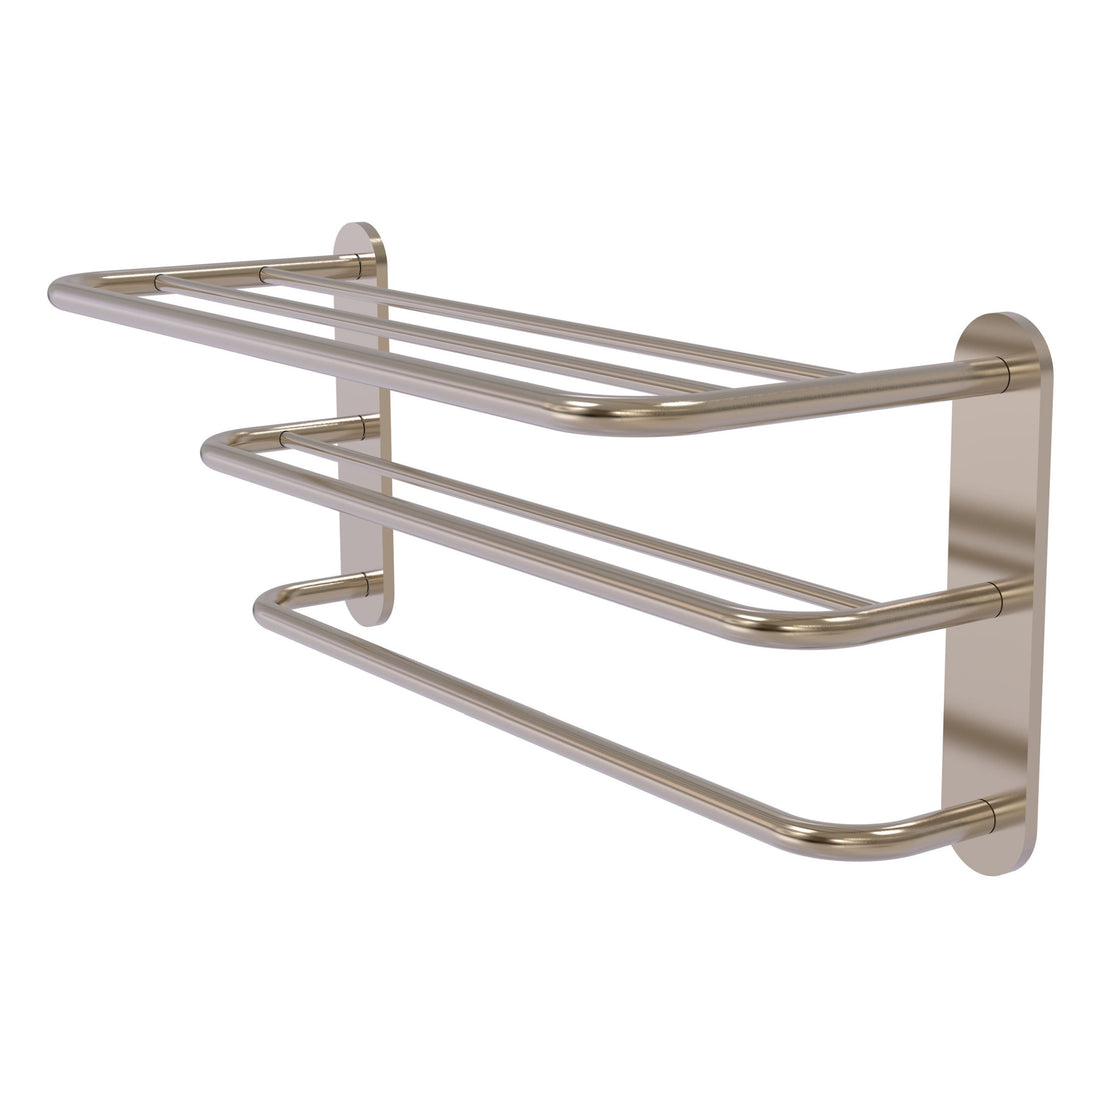 Brass towel shelf drying rack